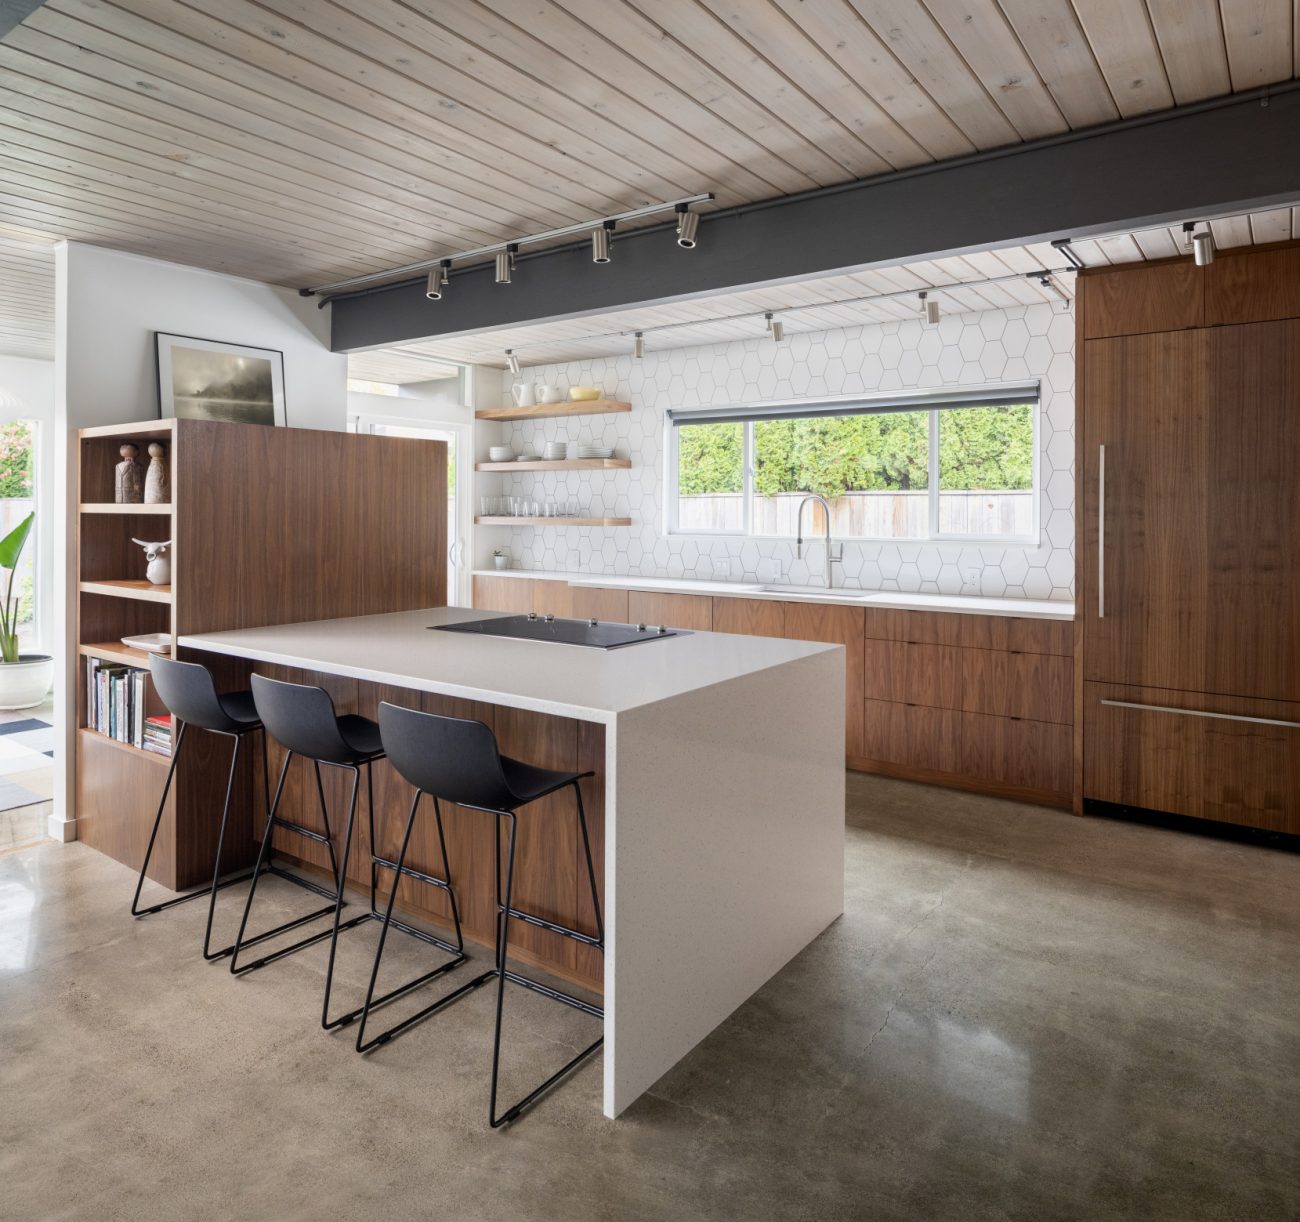 Luxury modern kitchen with wooden ceiling